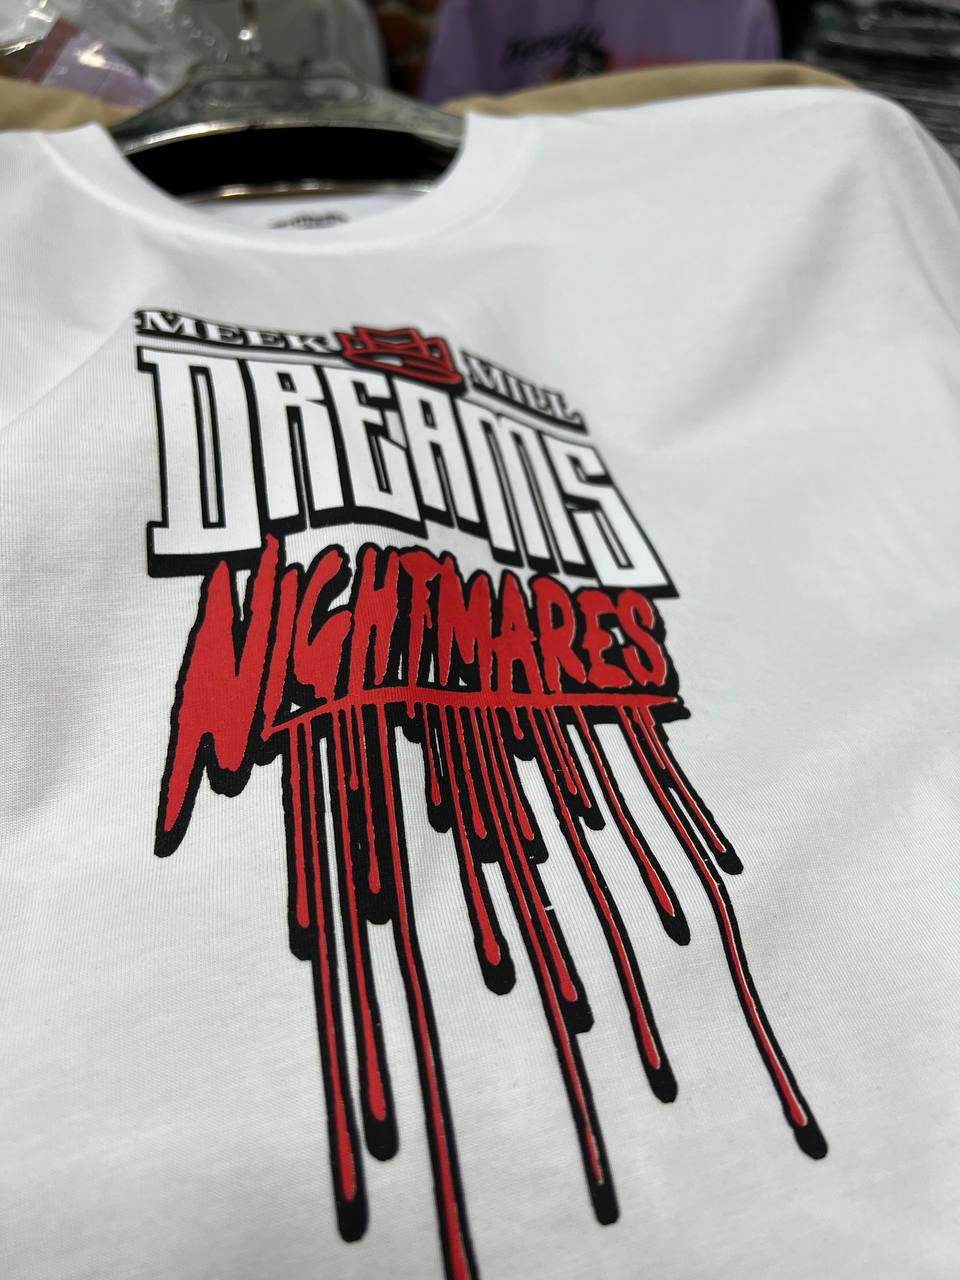 Dreams nightmare t-shirt